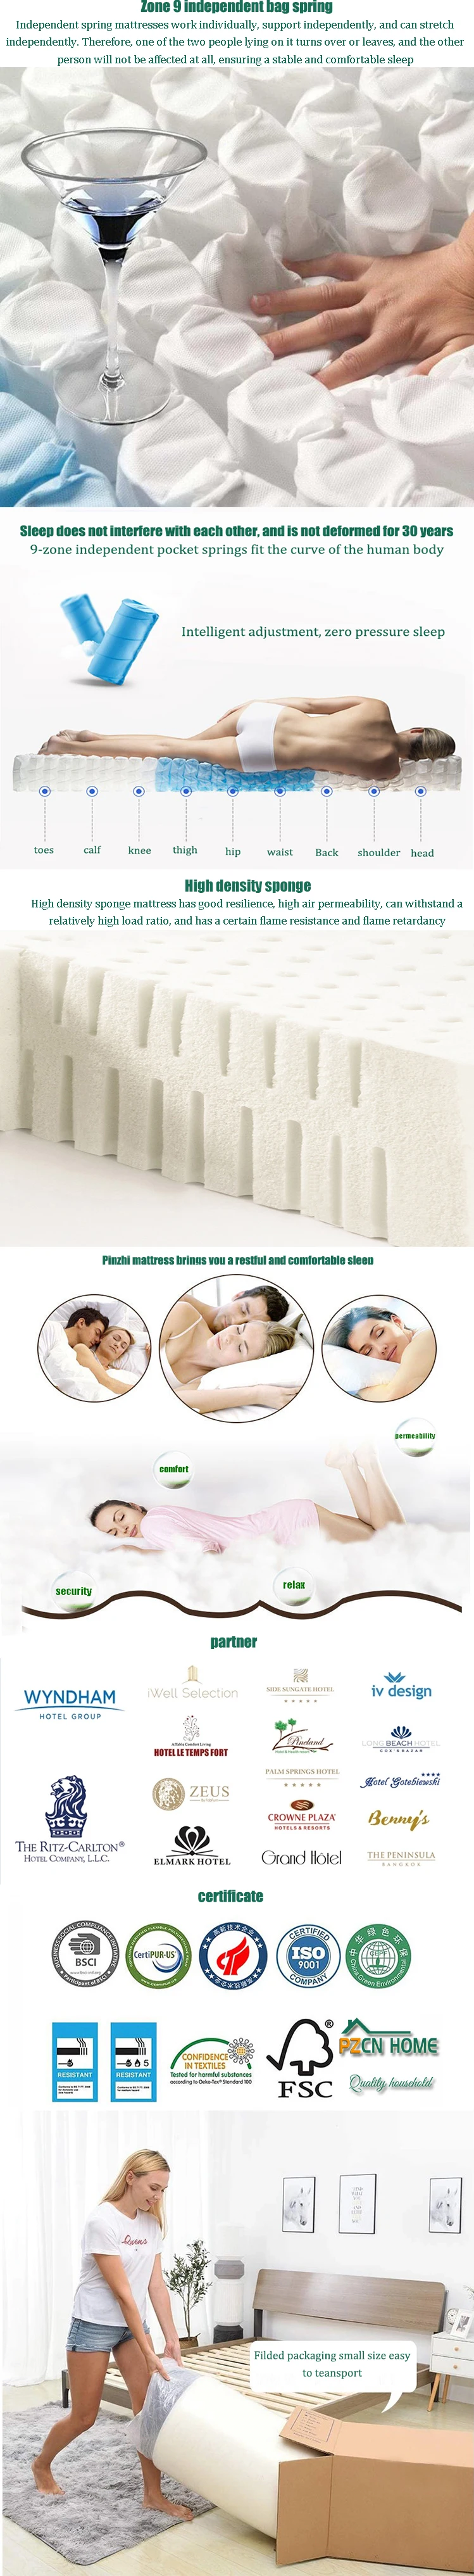 Pinzhi home ODM Knitted fabric relief pressure memory foam queen size mattress